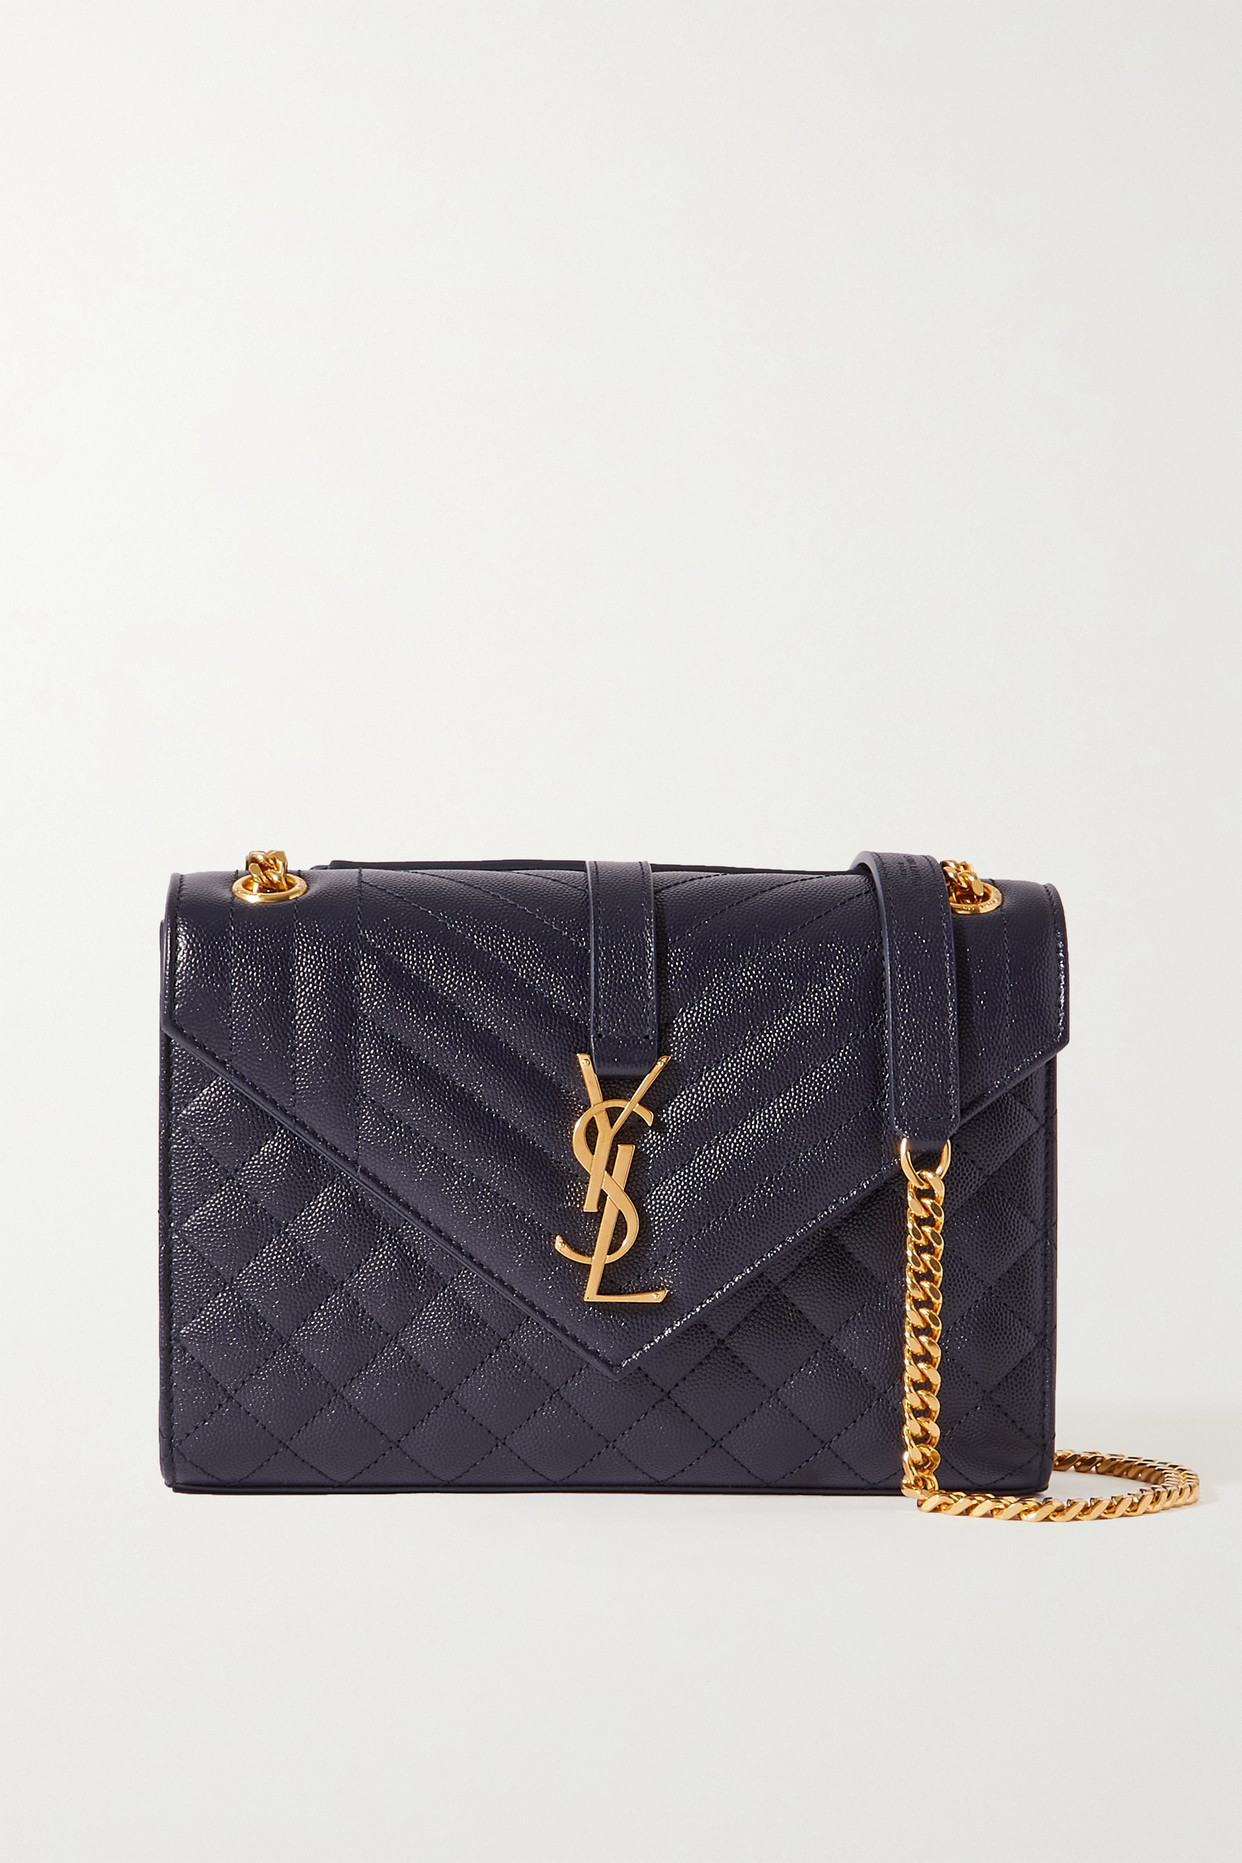 Yves Saint Laurent, Bags, Ysl Large Envelope Bag In Navy Blue